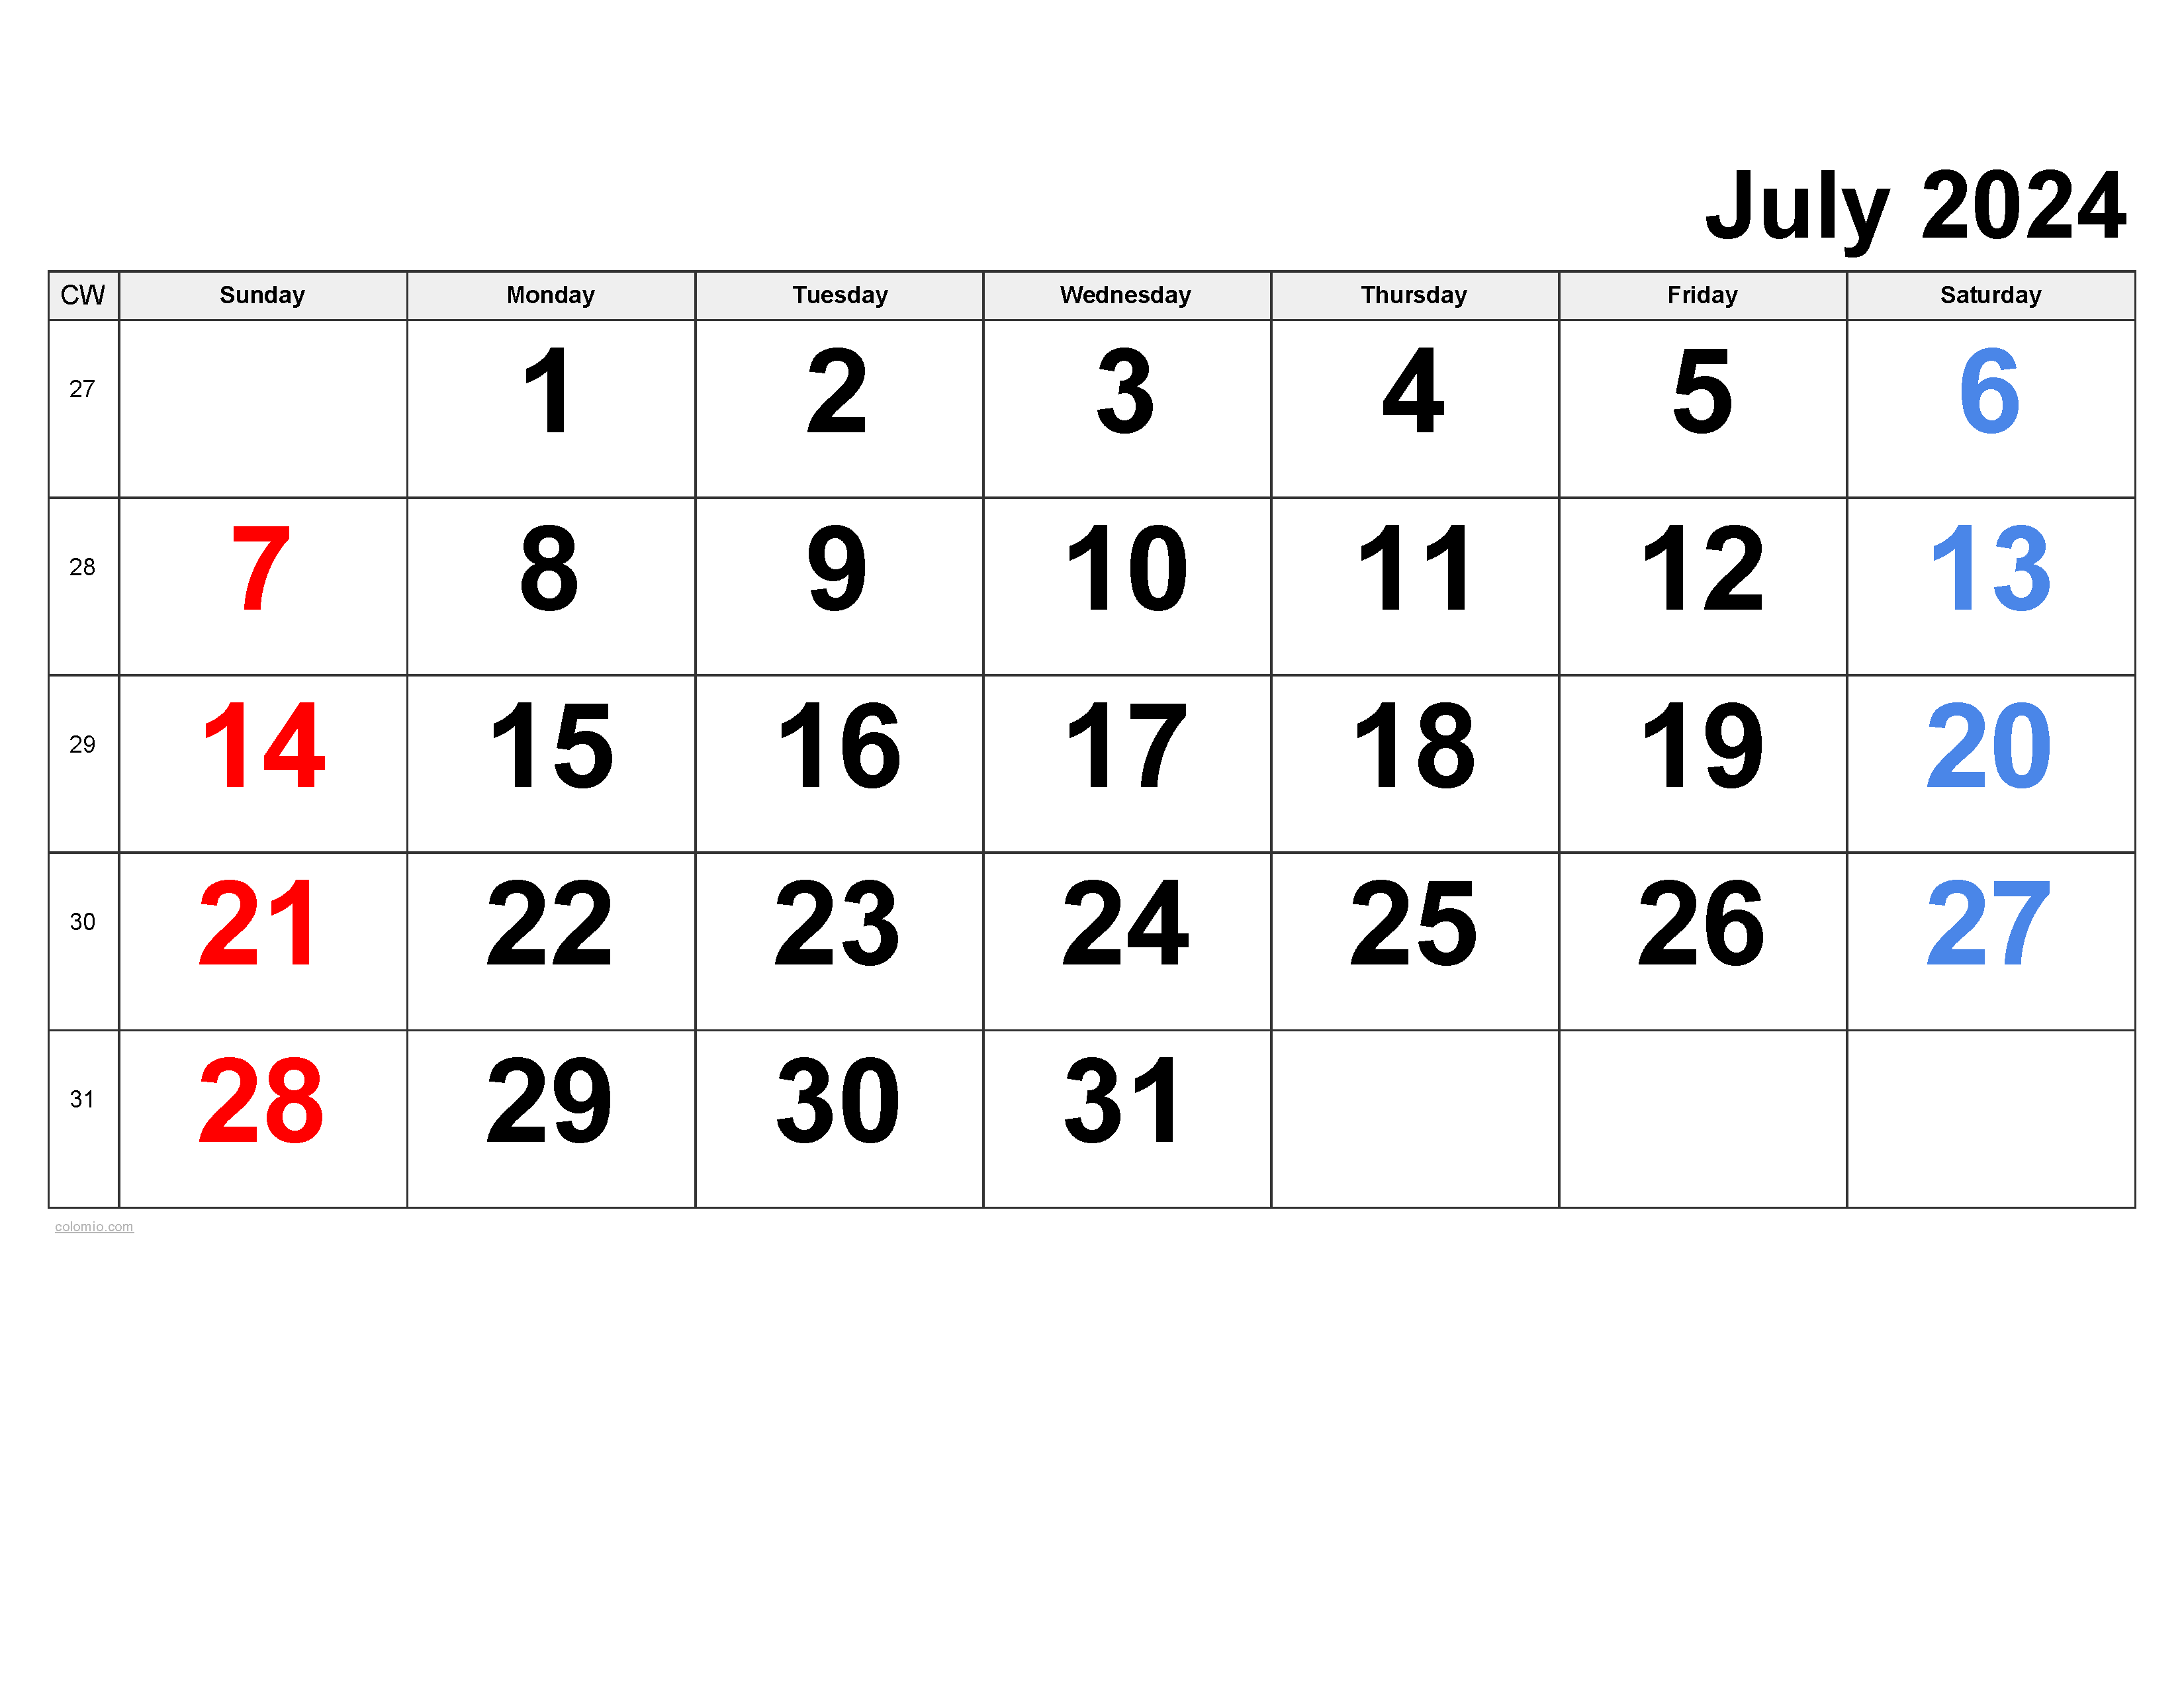 July 2024 Calendar | Free Printable Pdf, Xls And Png within 27 July 2024 Calendar Printable